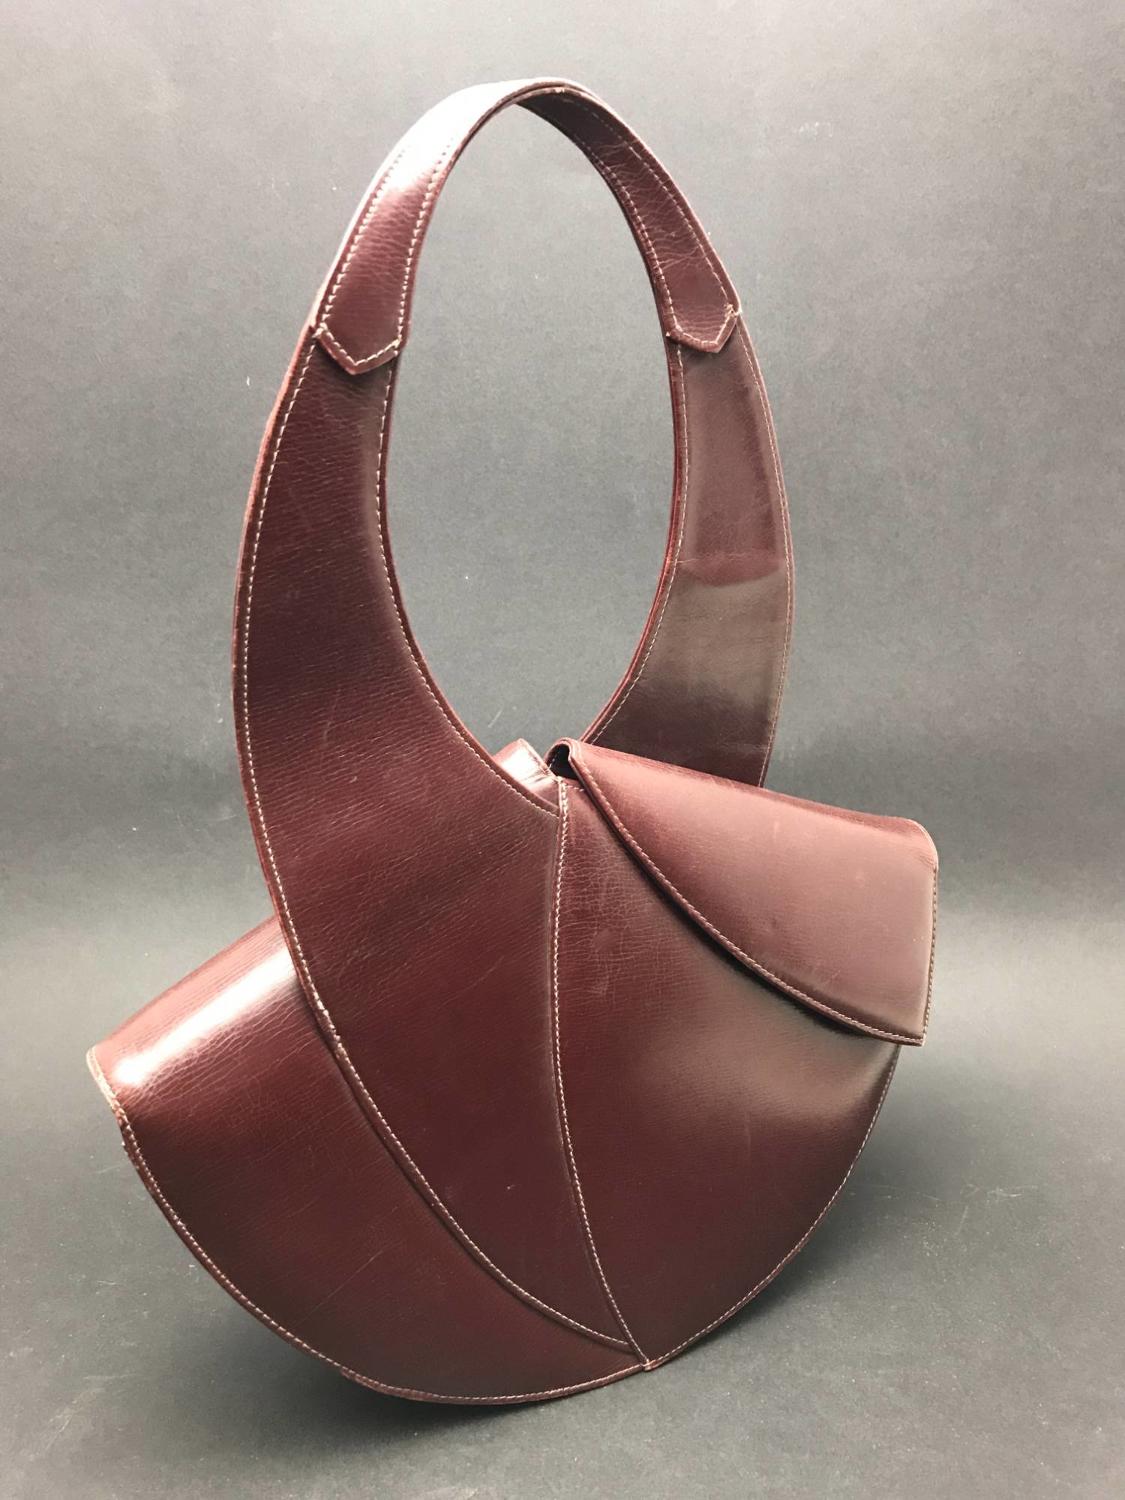 Unusual French Art Deco Fan Shaped Leather Handbag